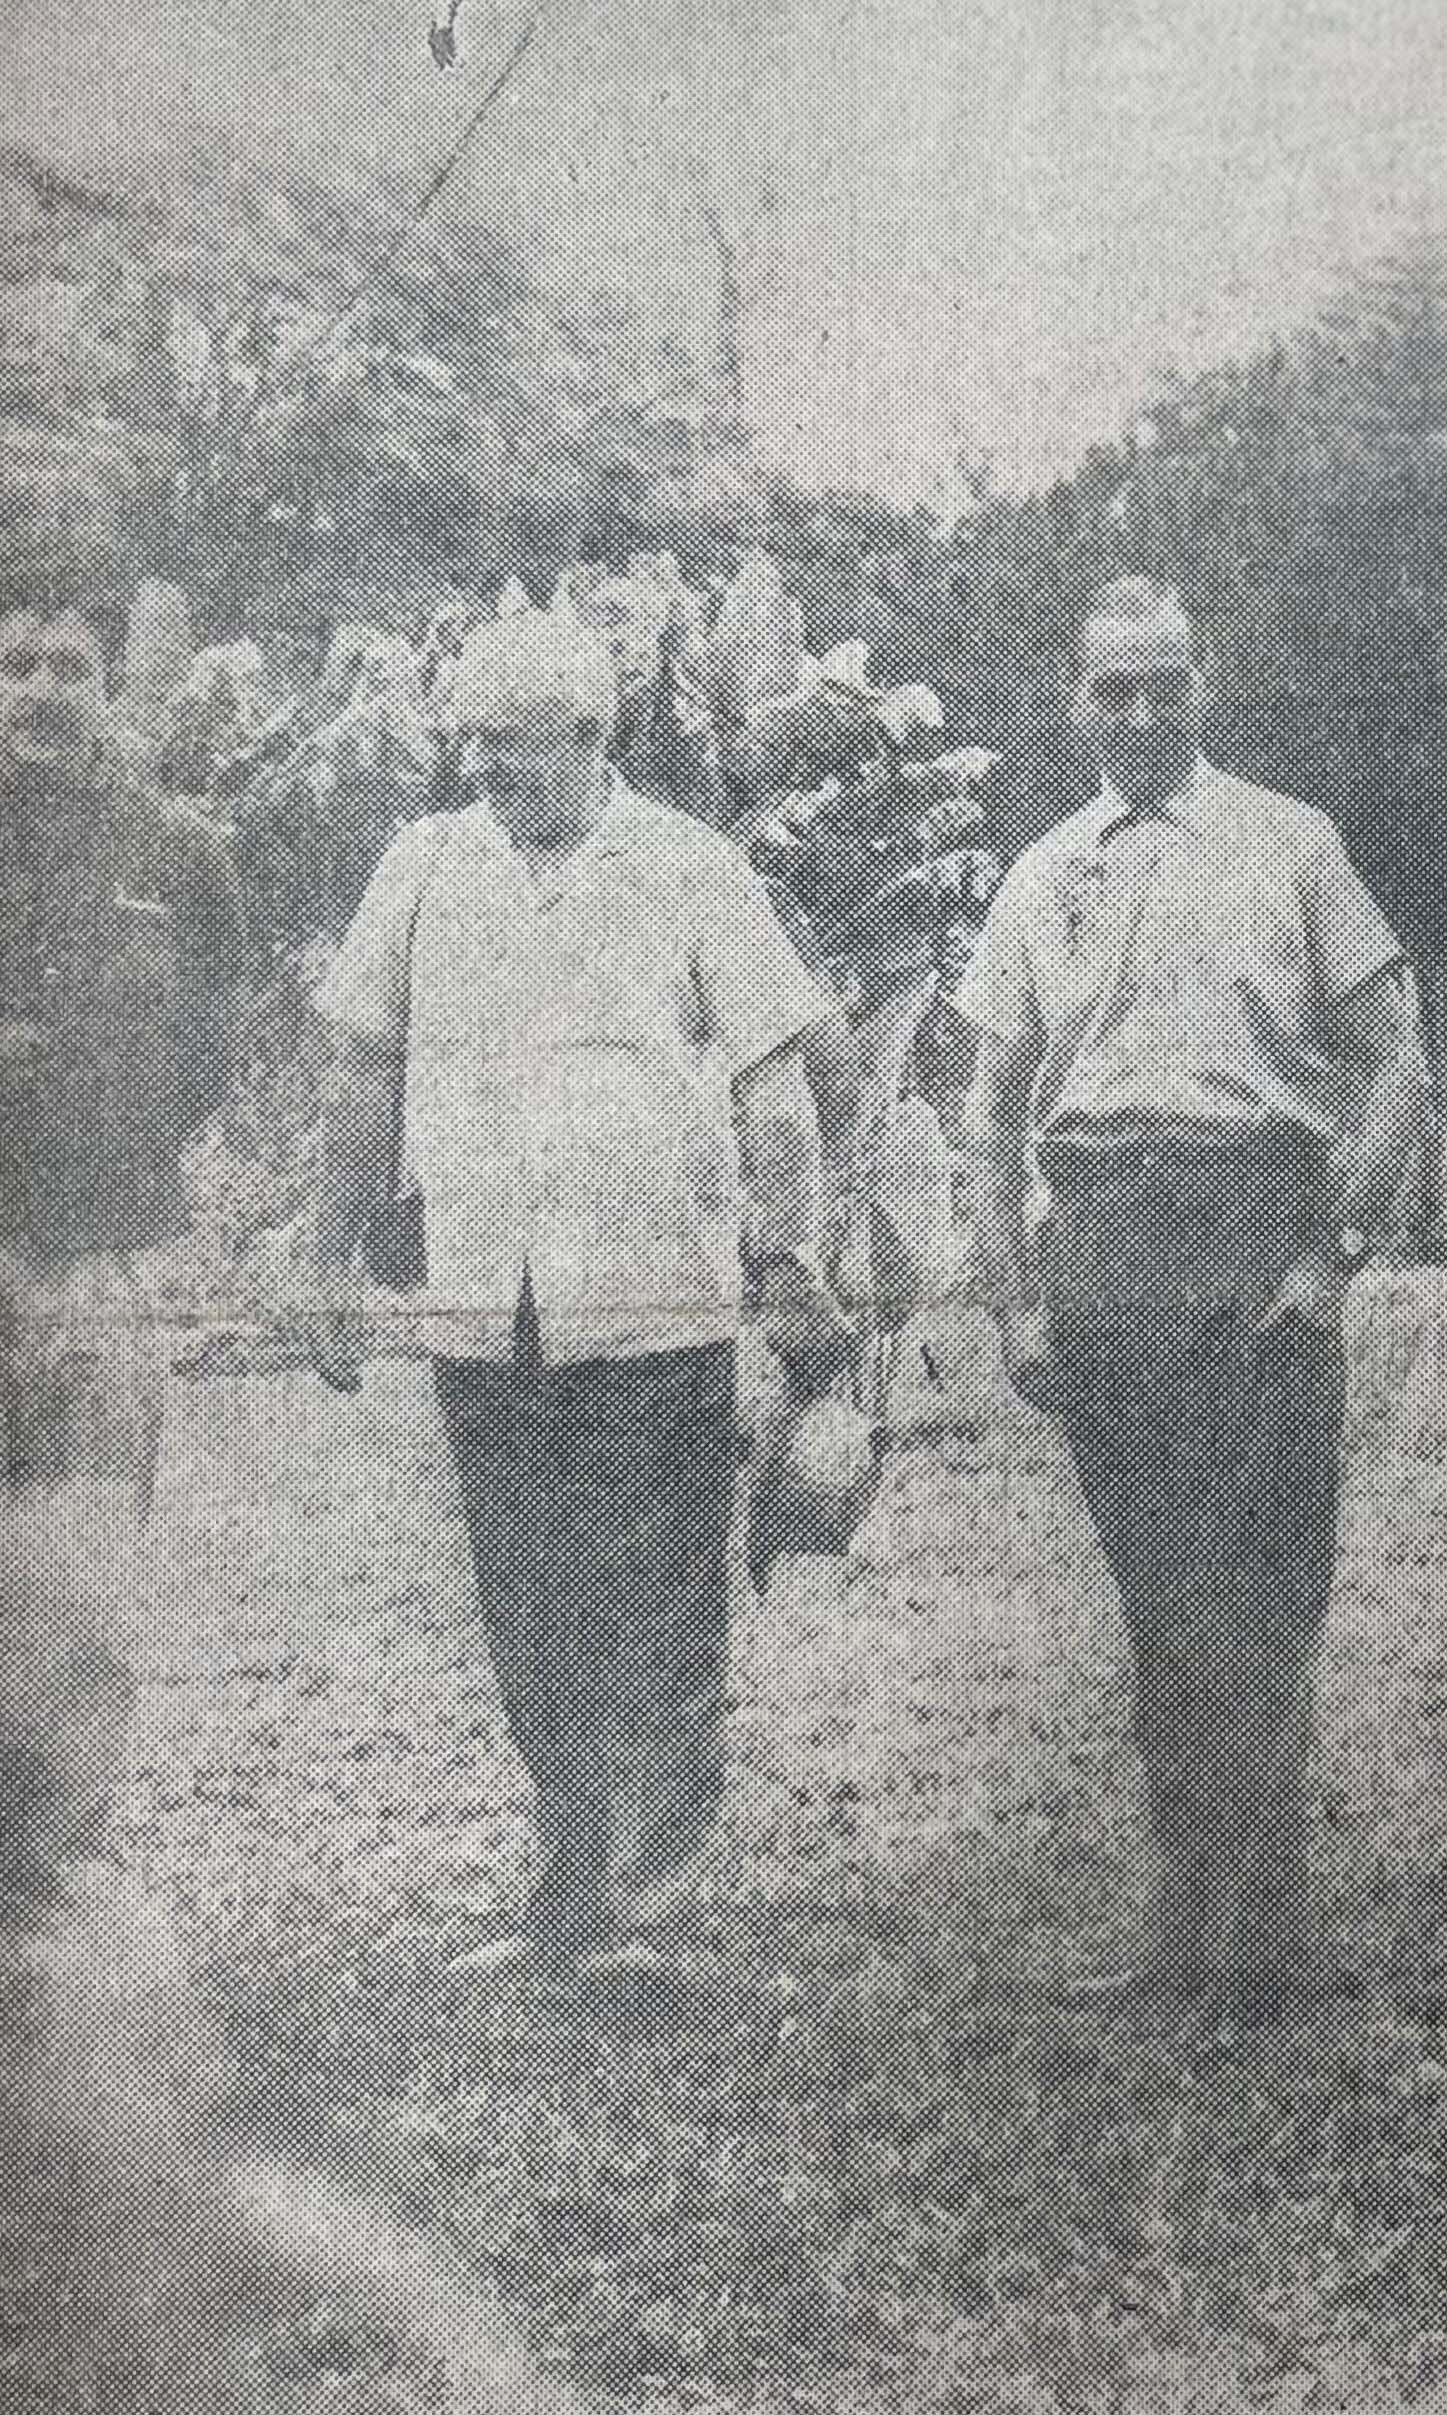 Cônsul britânico em Maringá - 1967